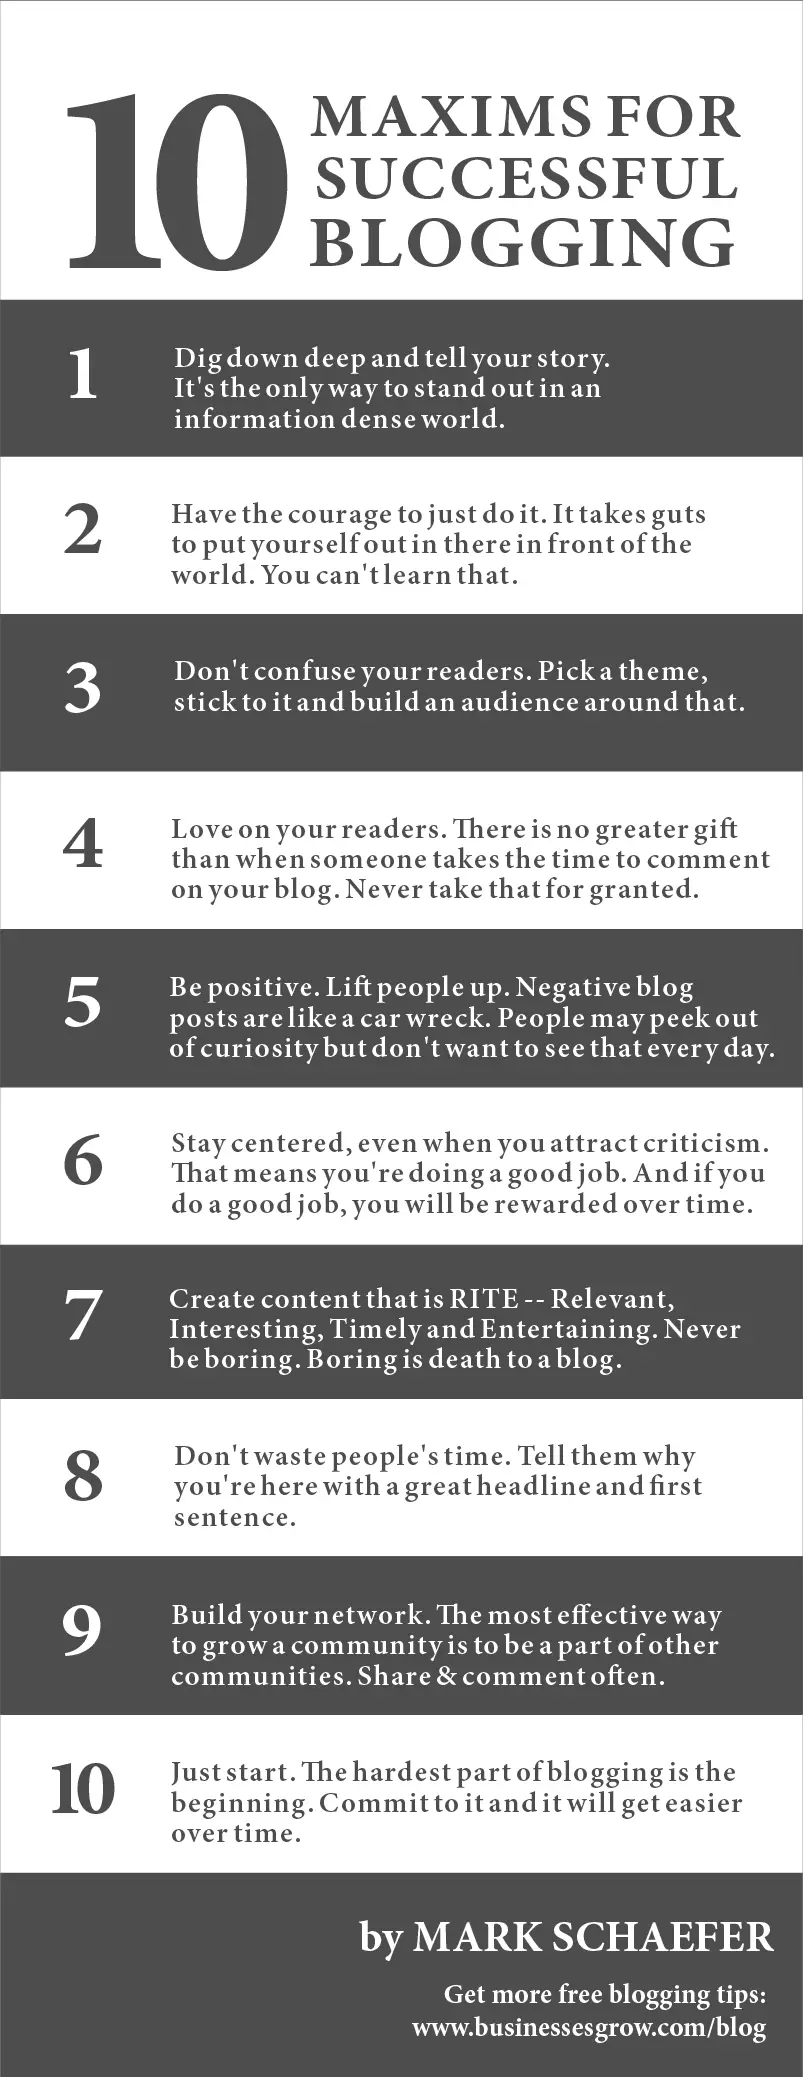 10 Fundamentals for Successful Blogging - Infographic